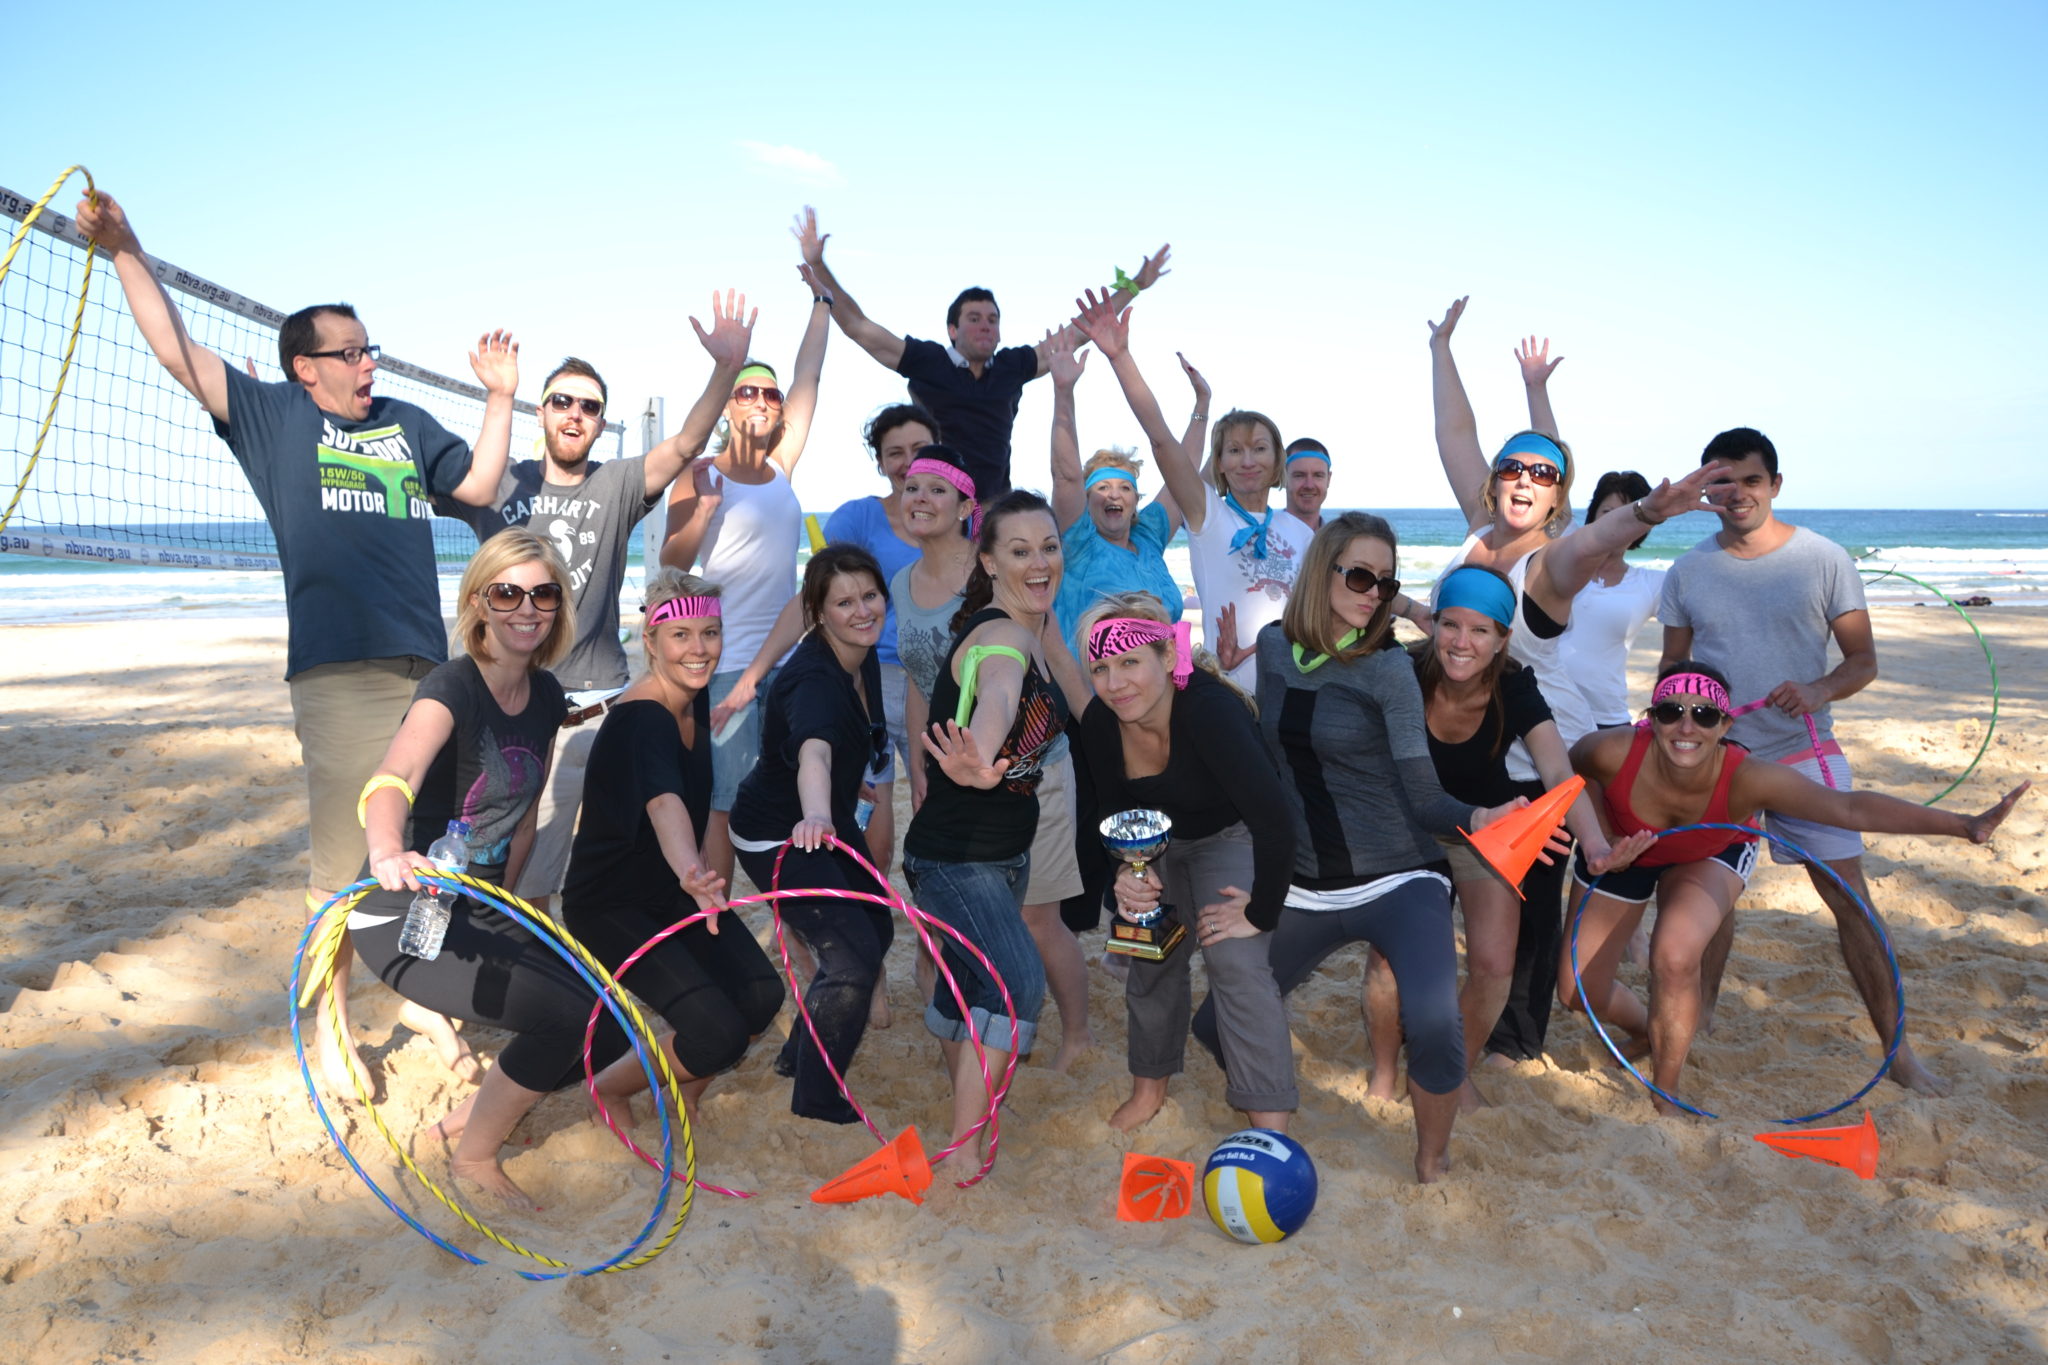 Beach Olympics: Corporate Offsite Team Building Activities